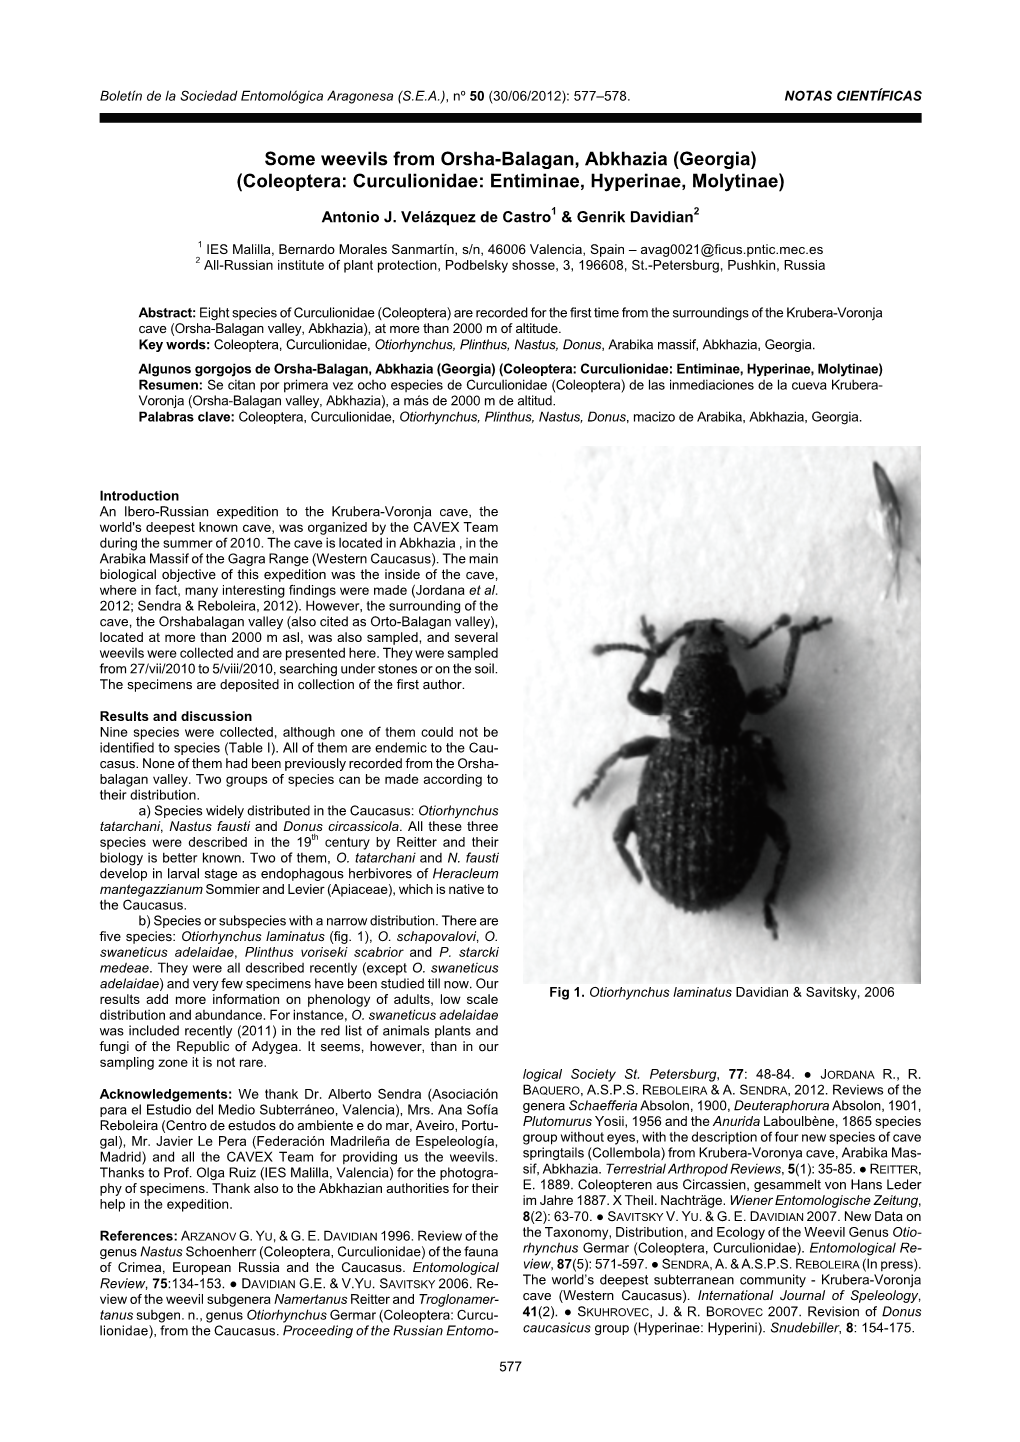 Some Weevils from Orsha-Balagan, Abkhazia (Georgia) (Coleoptera: Curculionidae: Entiminae, Hyperinae, Molytinae)